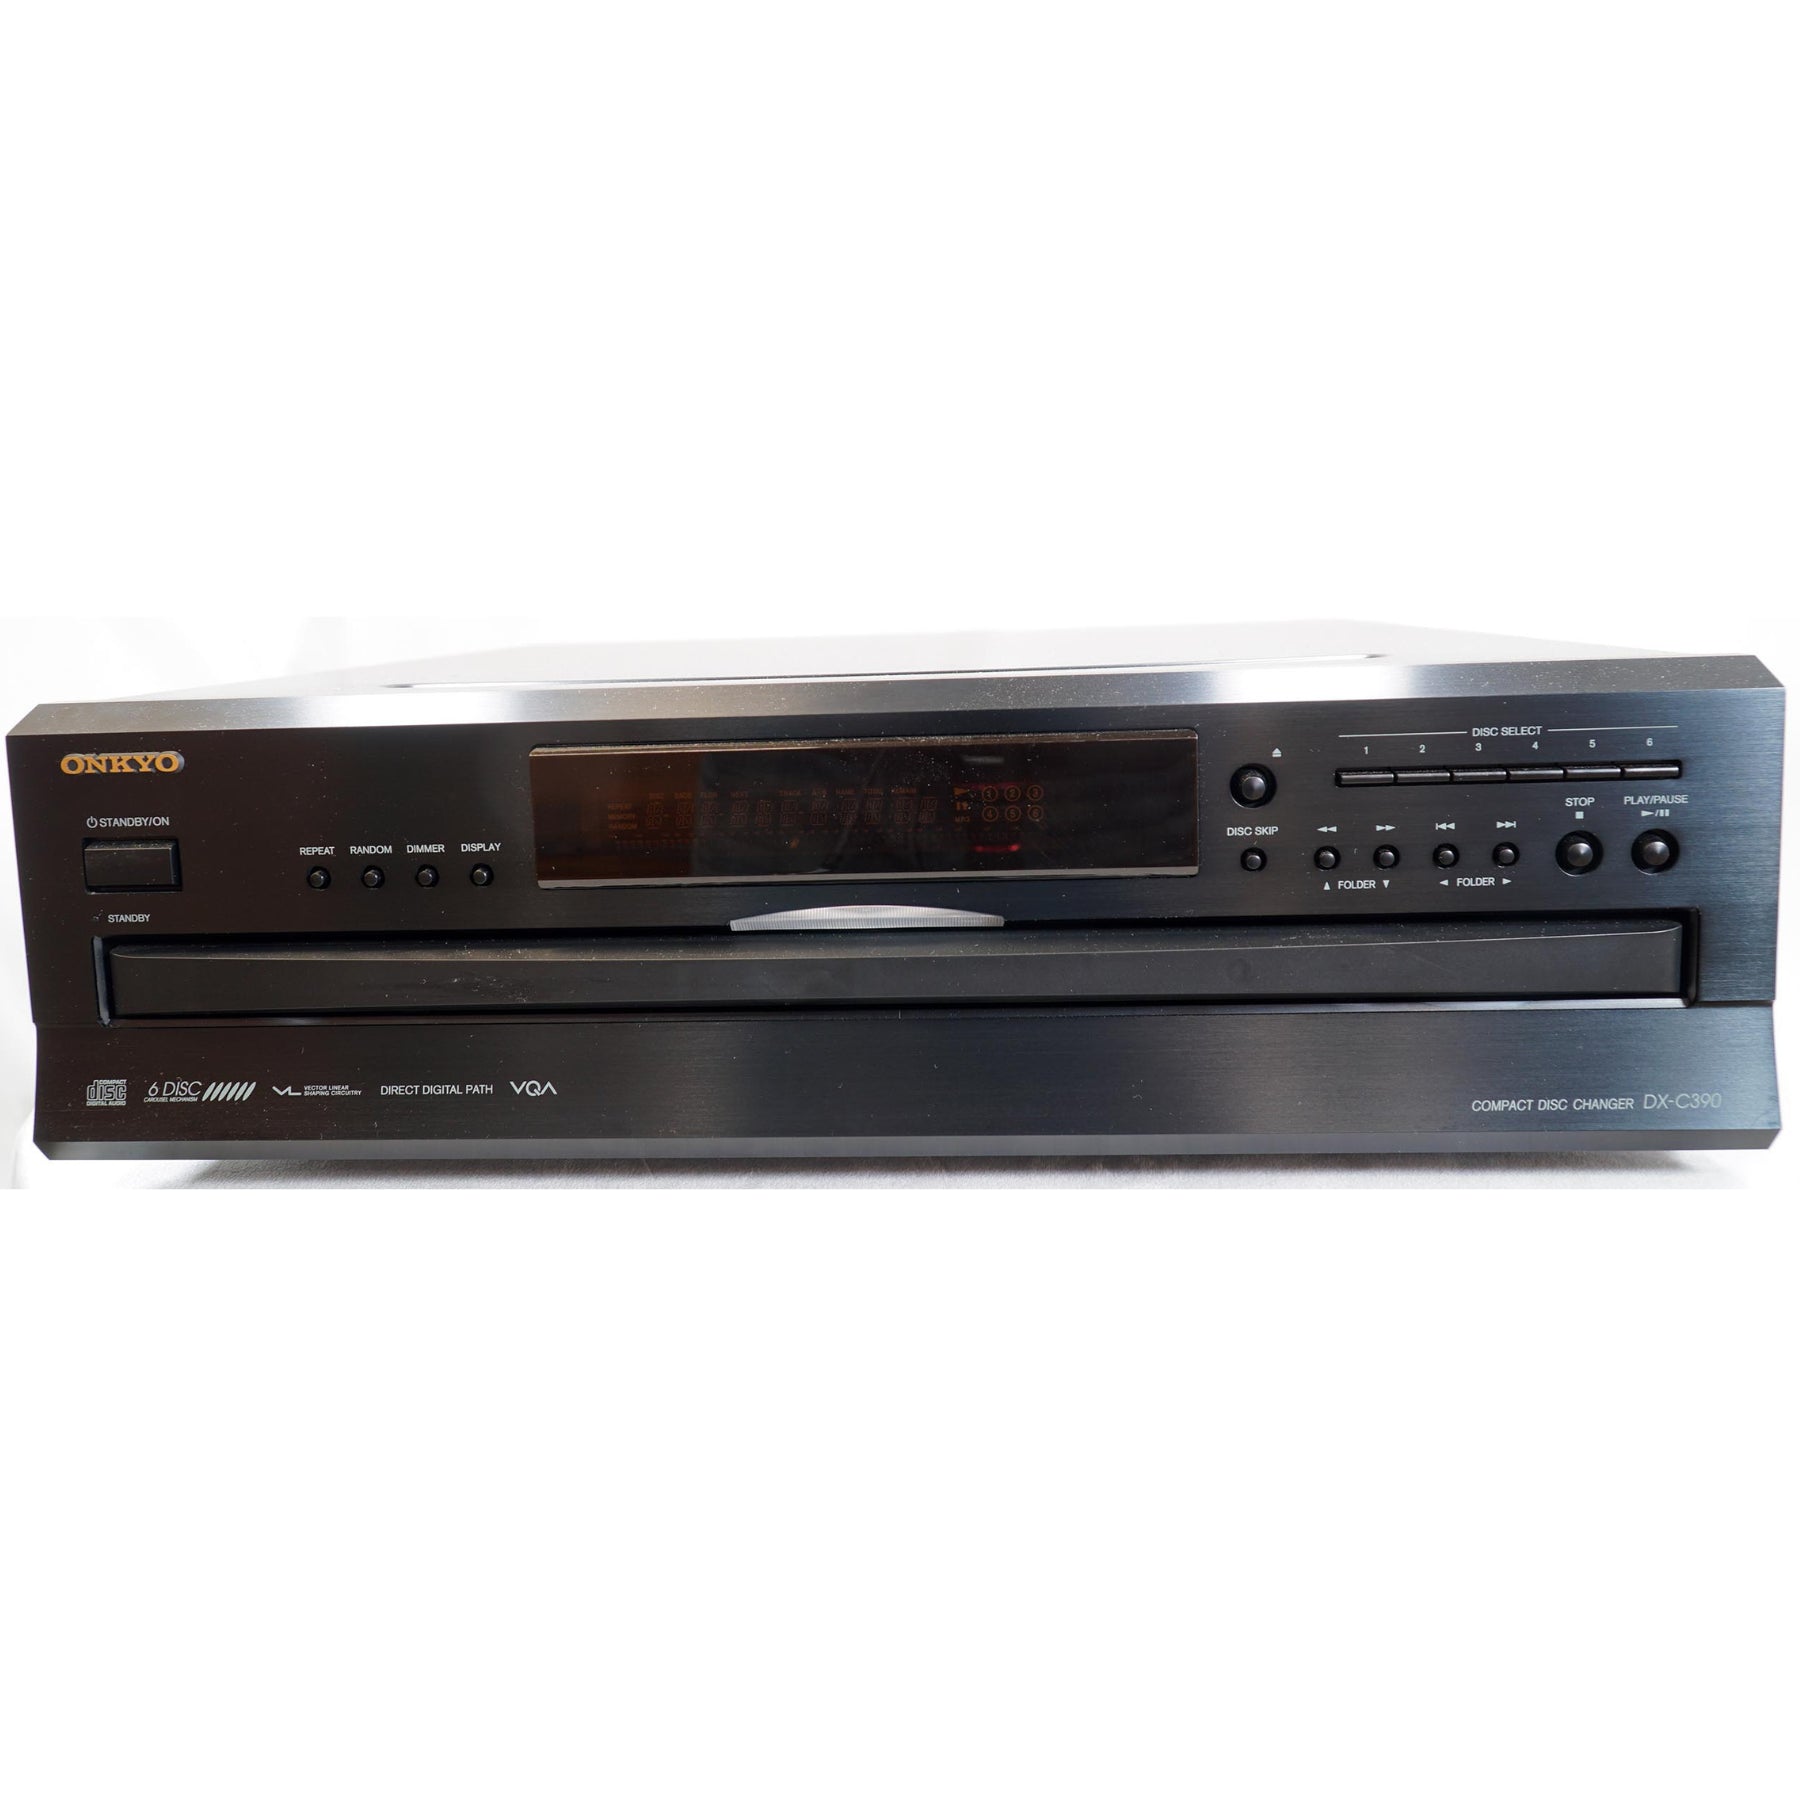 DX-C390 6 Disc CD Player, Onkyo